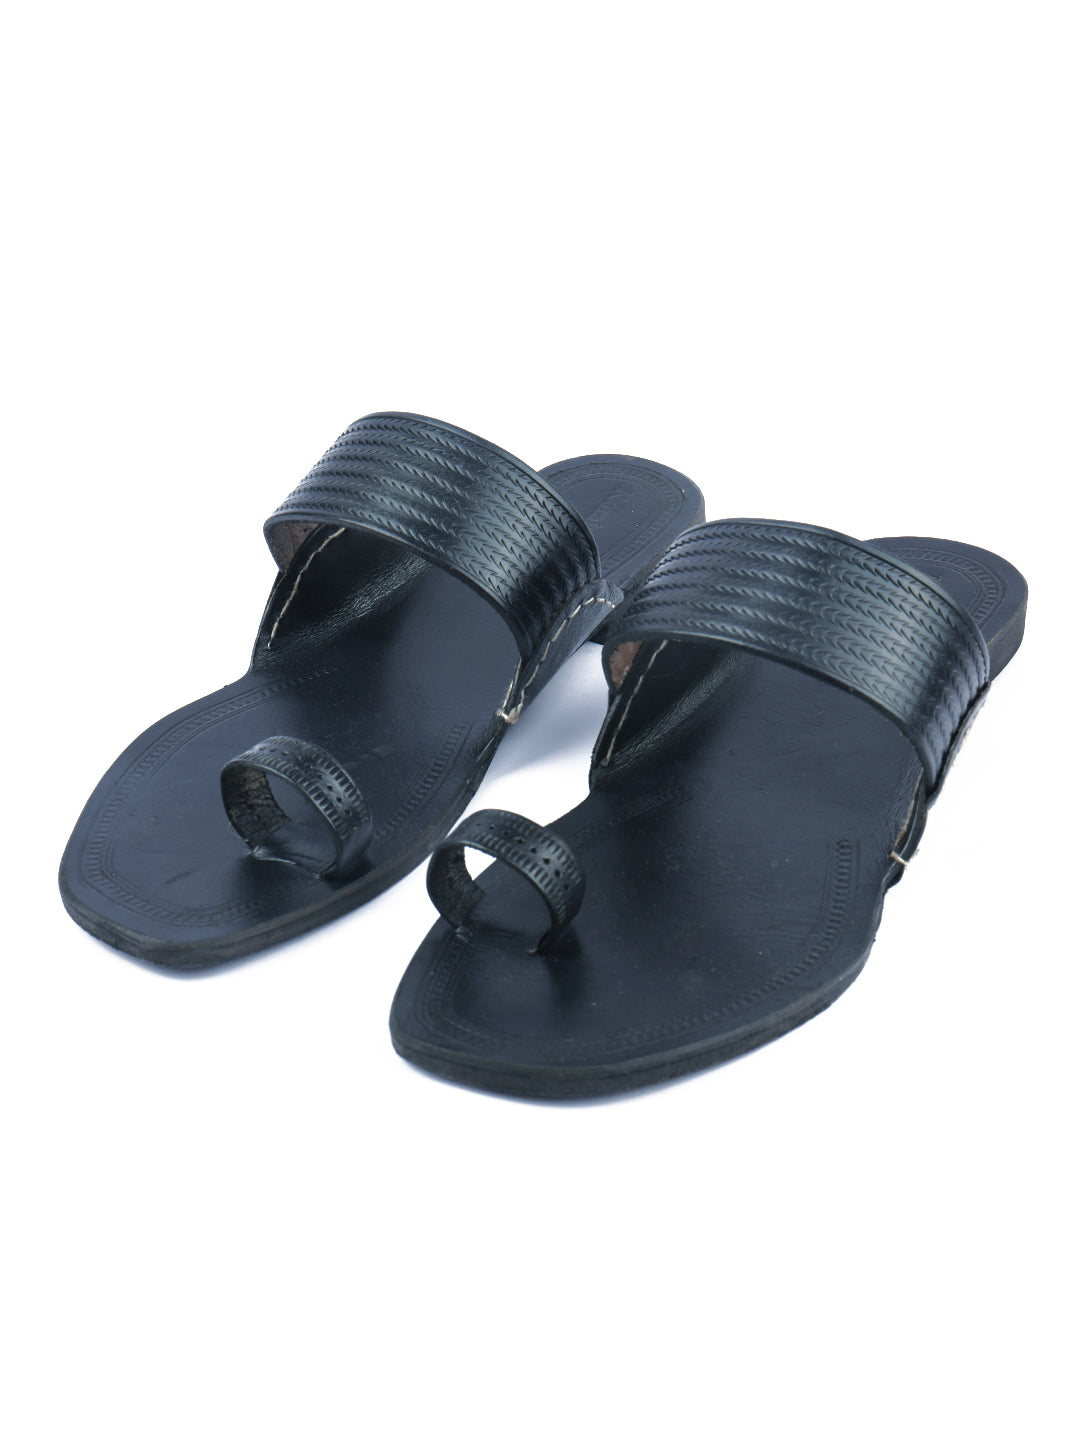 Kolhapuri Chappal For Men 2077, Slipper Type: Leather Slipper at Rs  550/pair in Bid